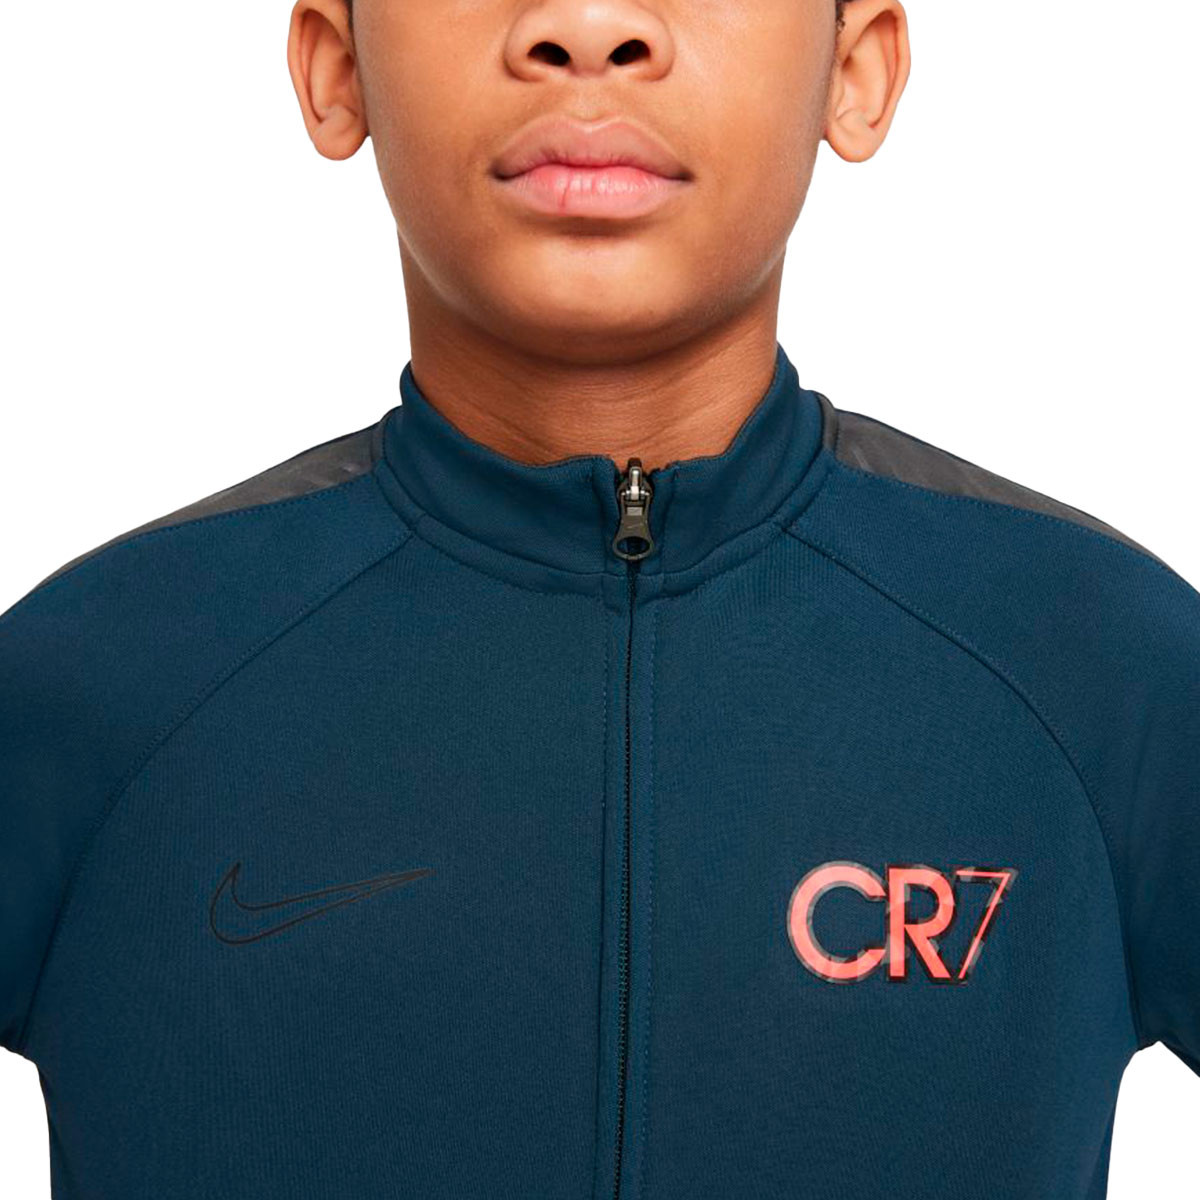 Chándal Nike CR7 Niño Navy-Anthracite-Black Fútbol